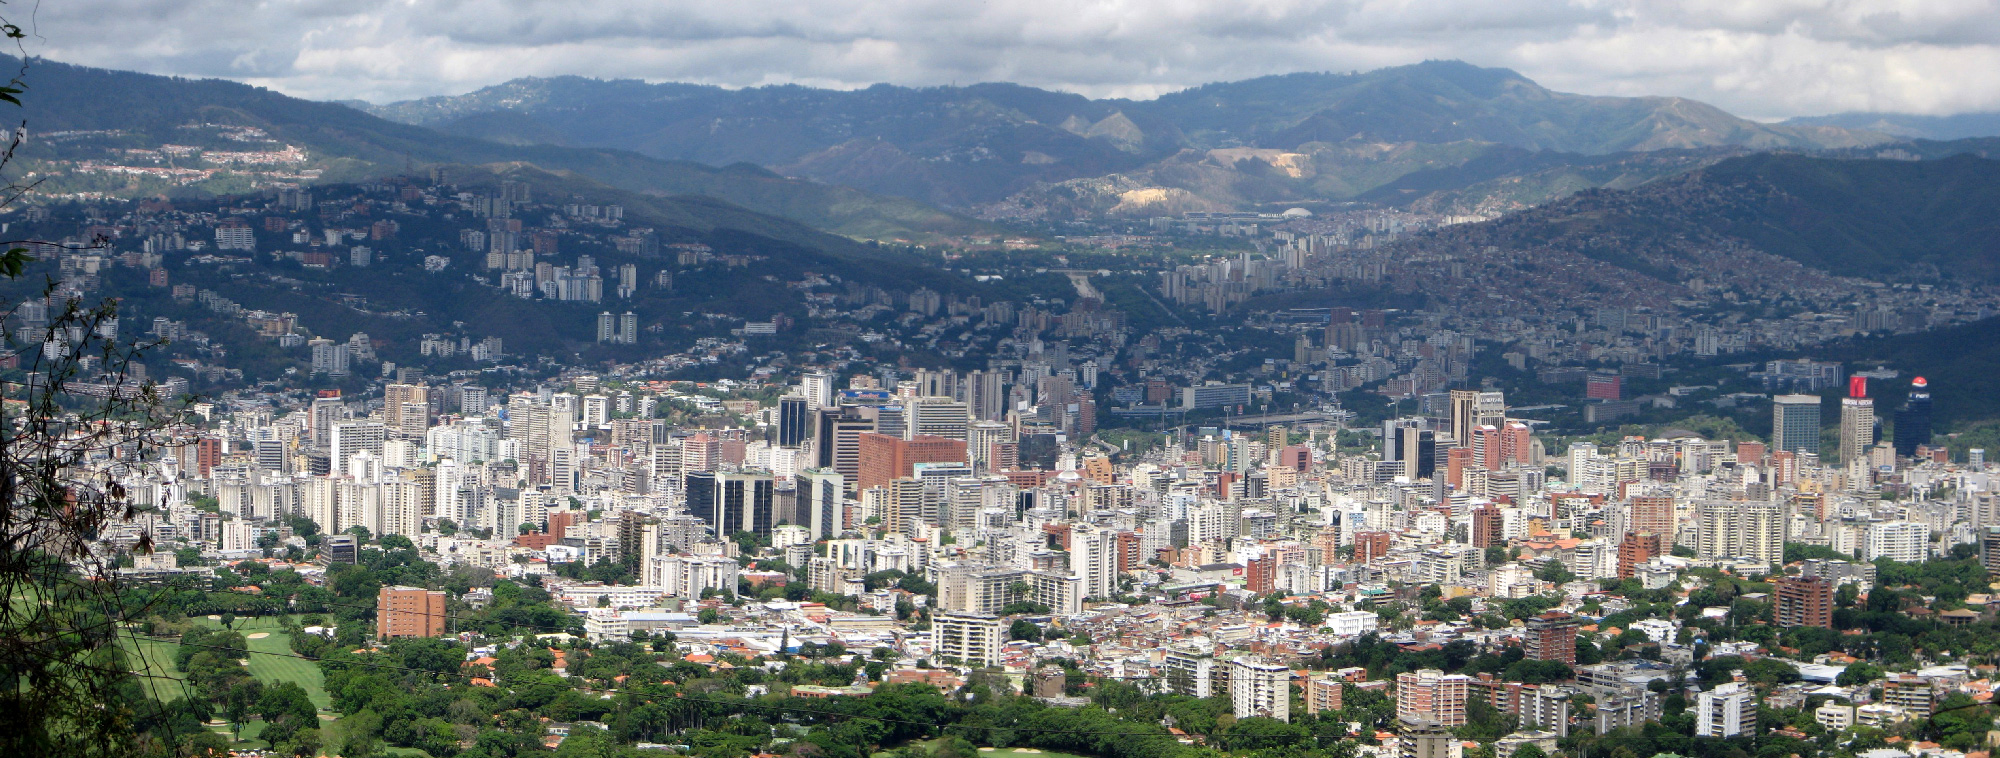 http://upload.wikimedia.org/wikipedia/commons/9/95/CaracasAvila.jpg